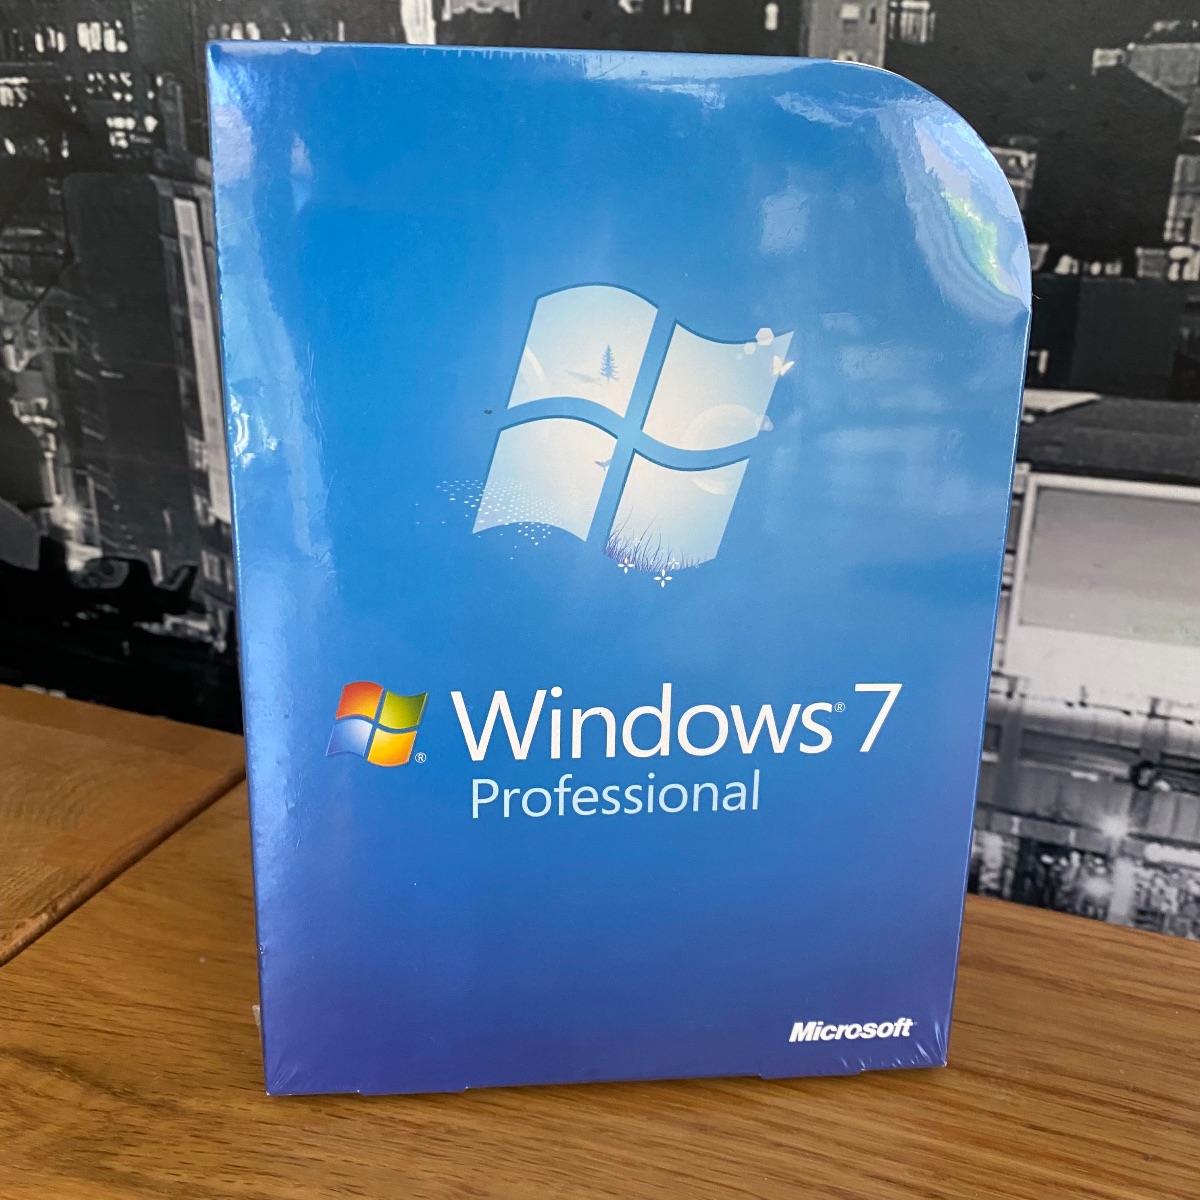 Windows 7 Professional 32/64-Bit DVD FQC-00133 100% Genuine UK Retail Sealed FQC-00133 882224883542 (Brand New)